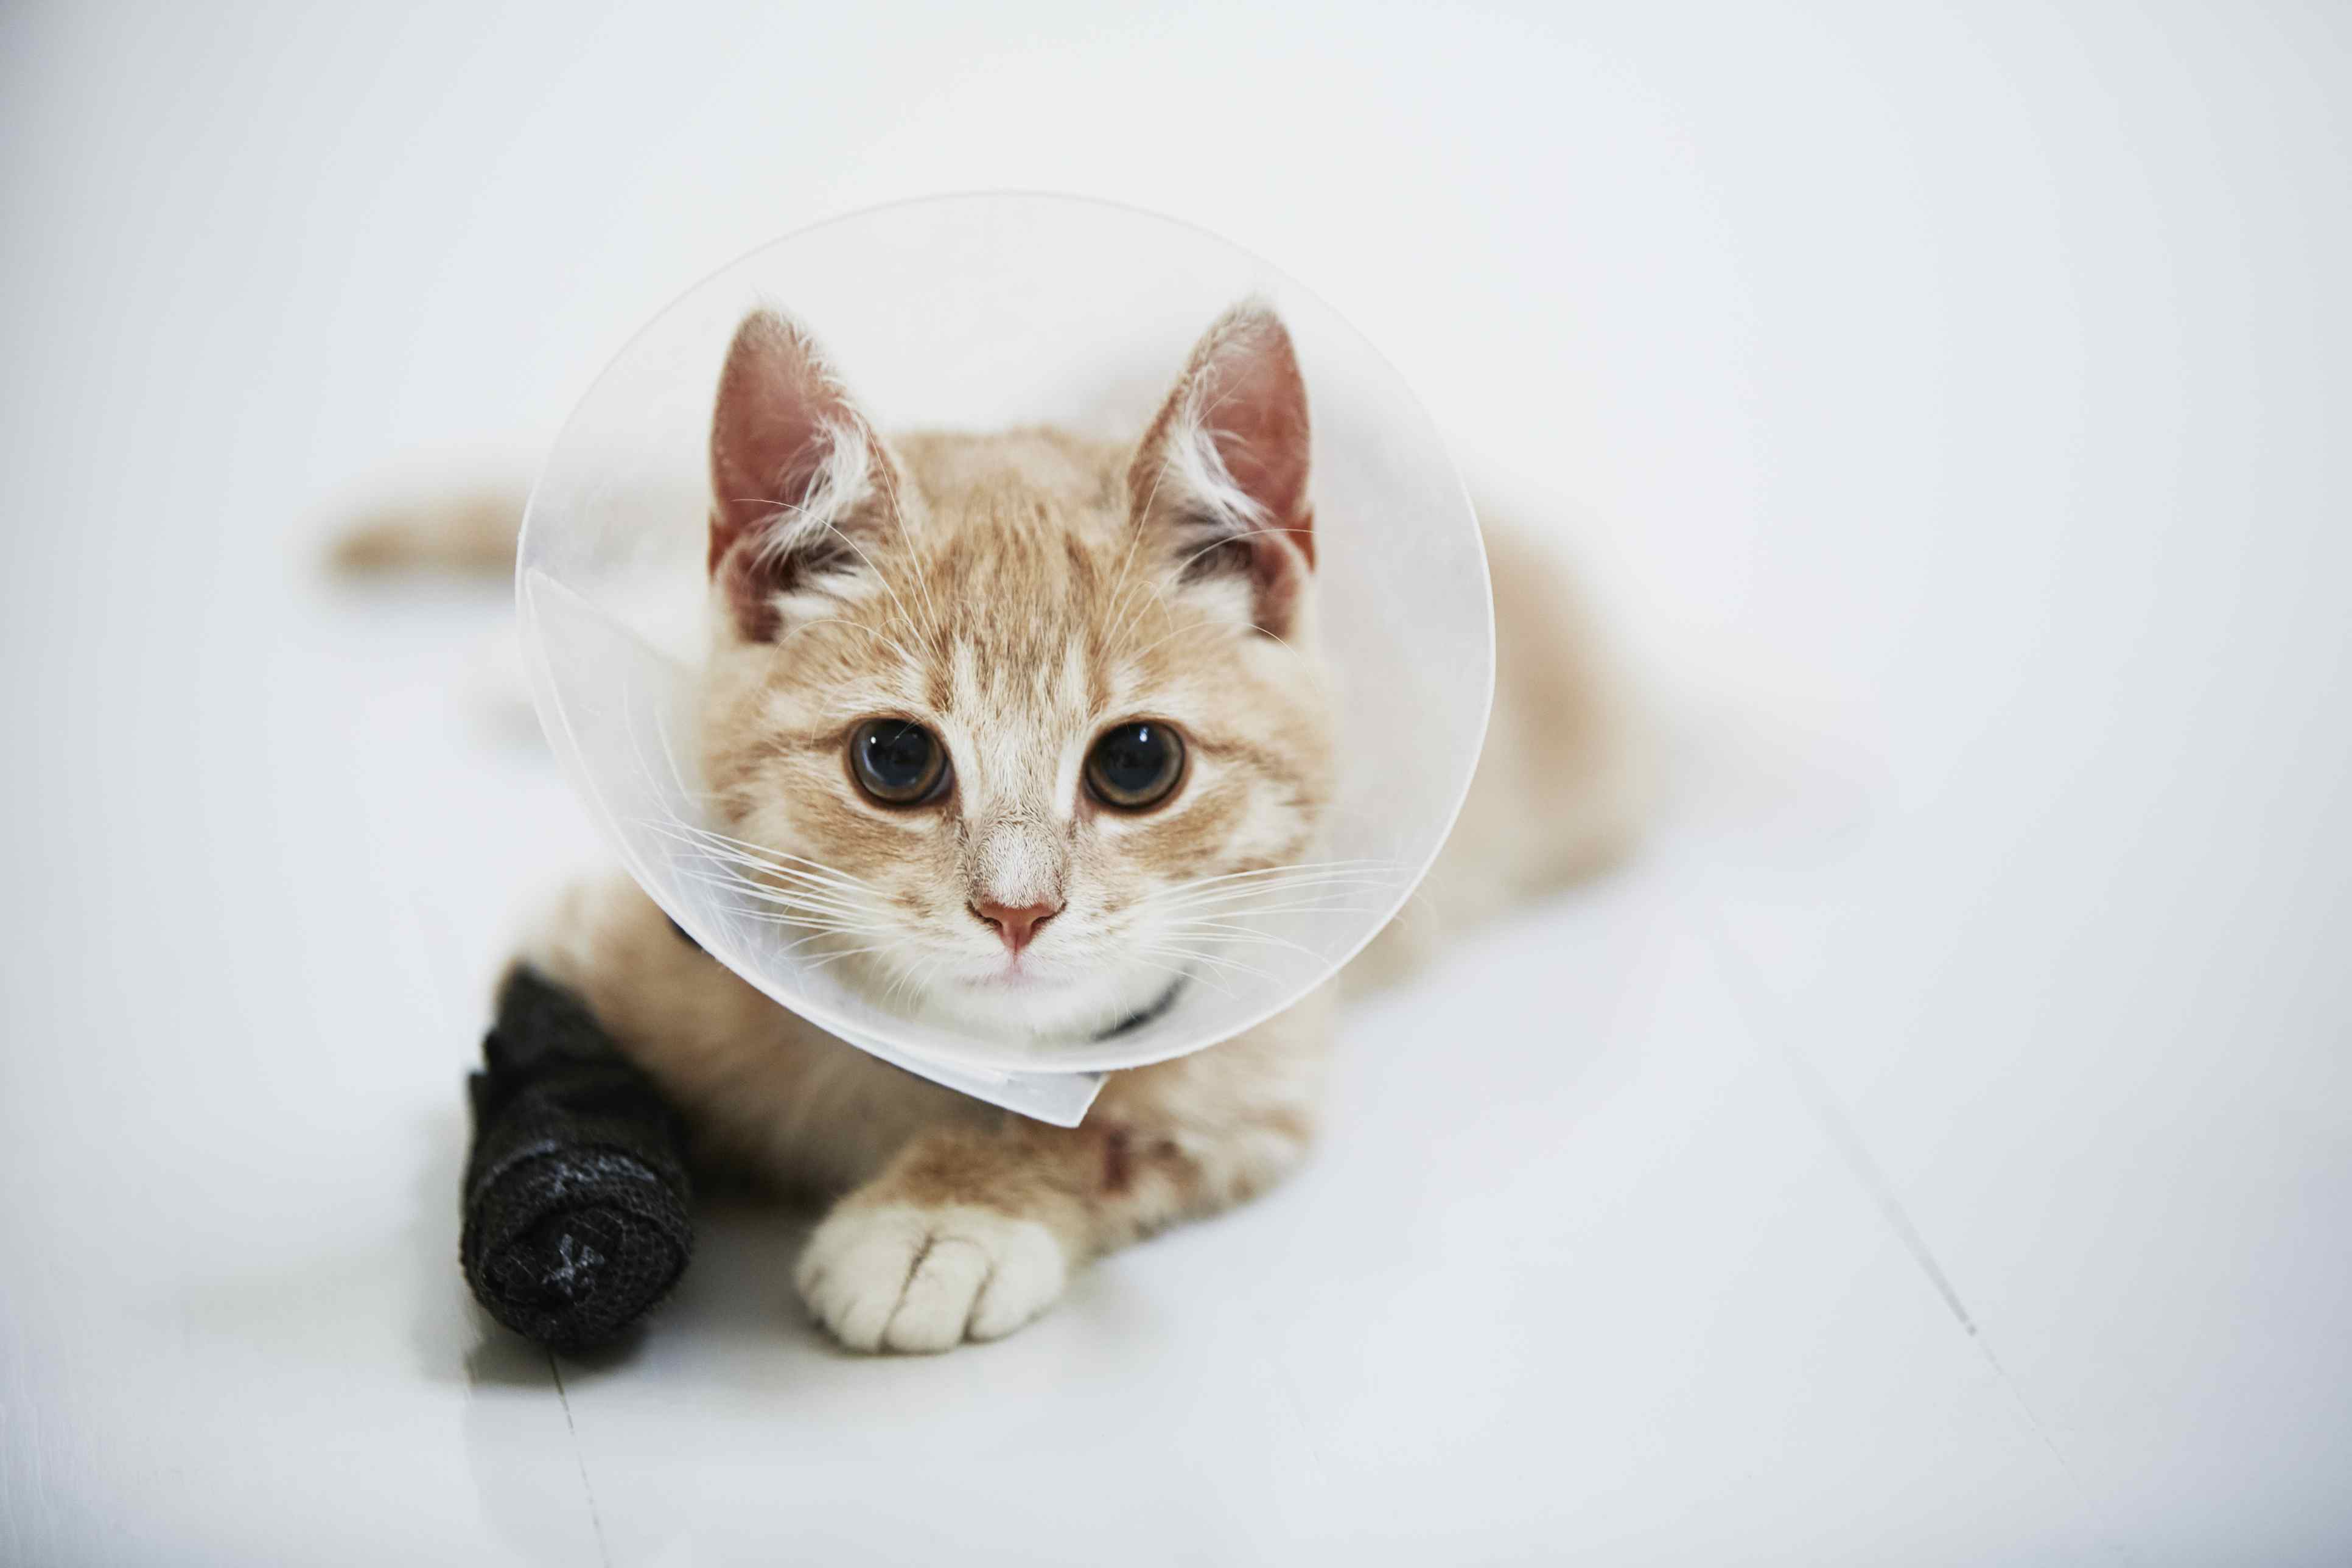 Cat wearing medical cone collar